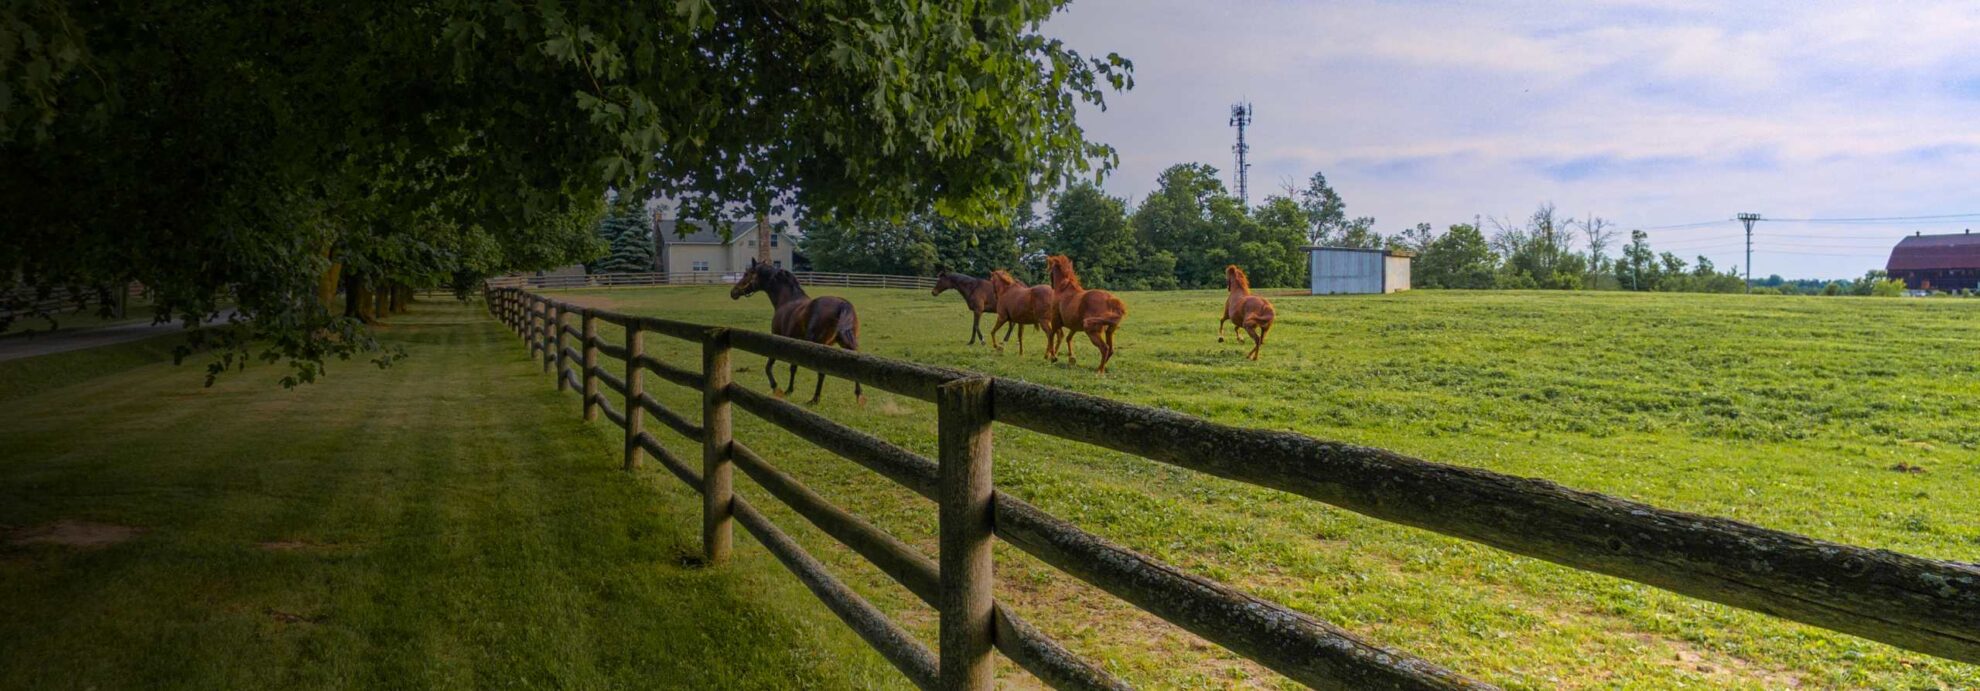 horse farm fencing in greeley co